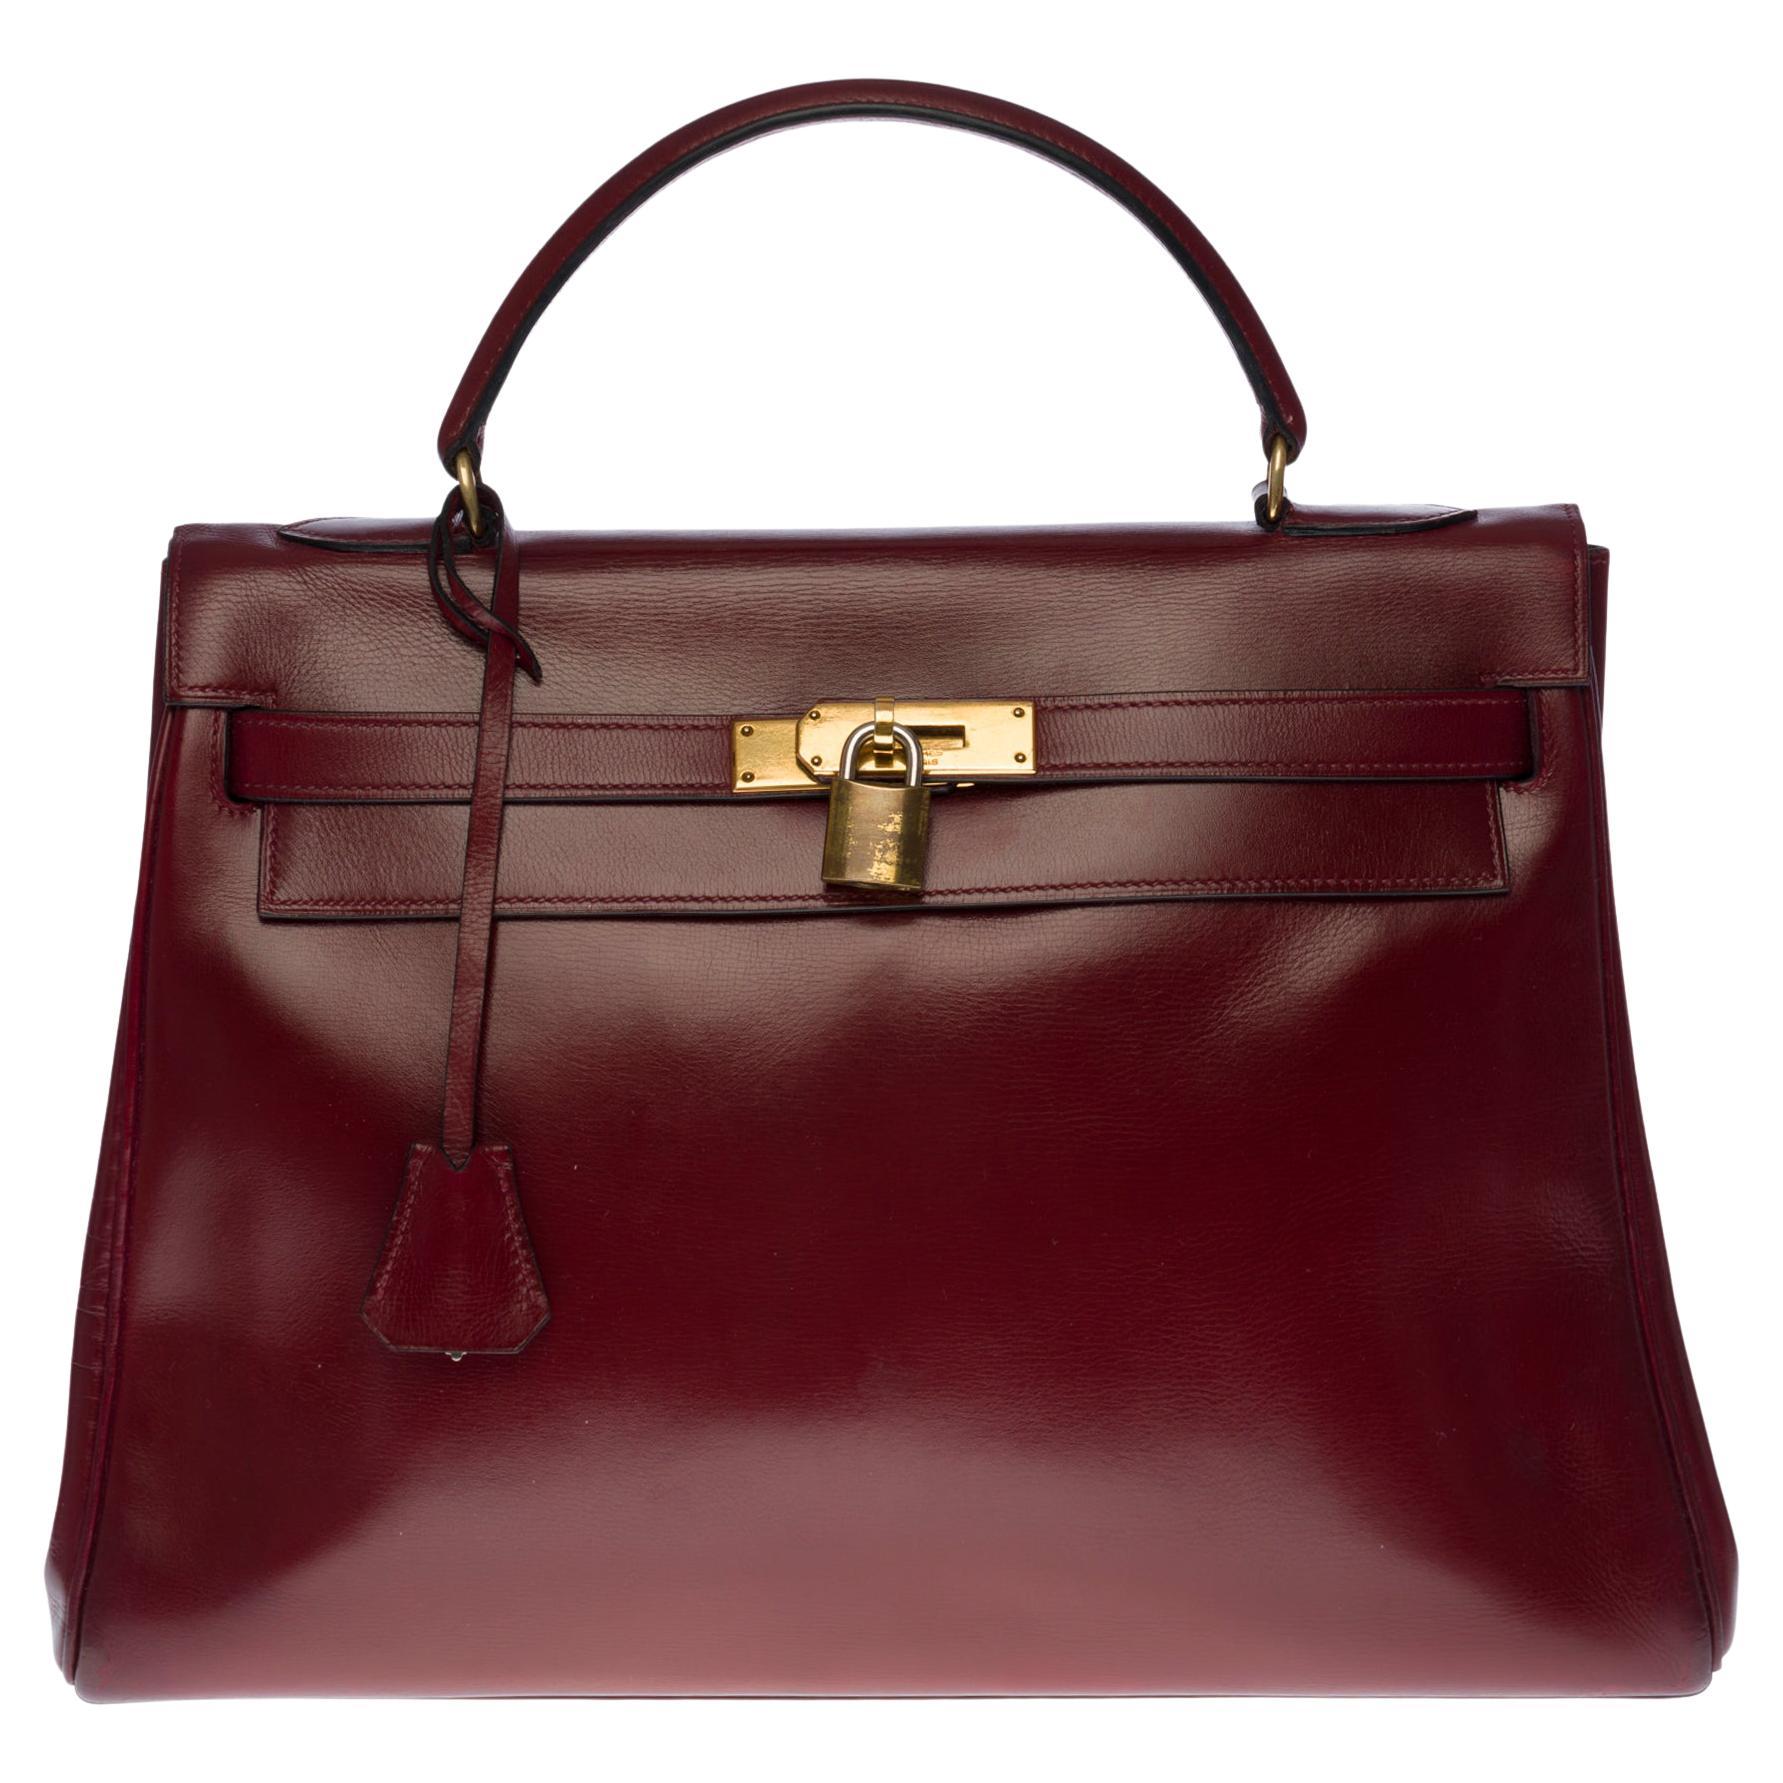 Gorgeous Hermès Kelly 32 handbag in Burgundy Calf leather, GHW